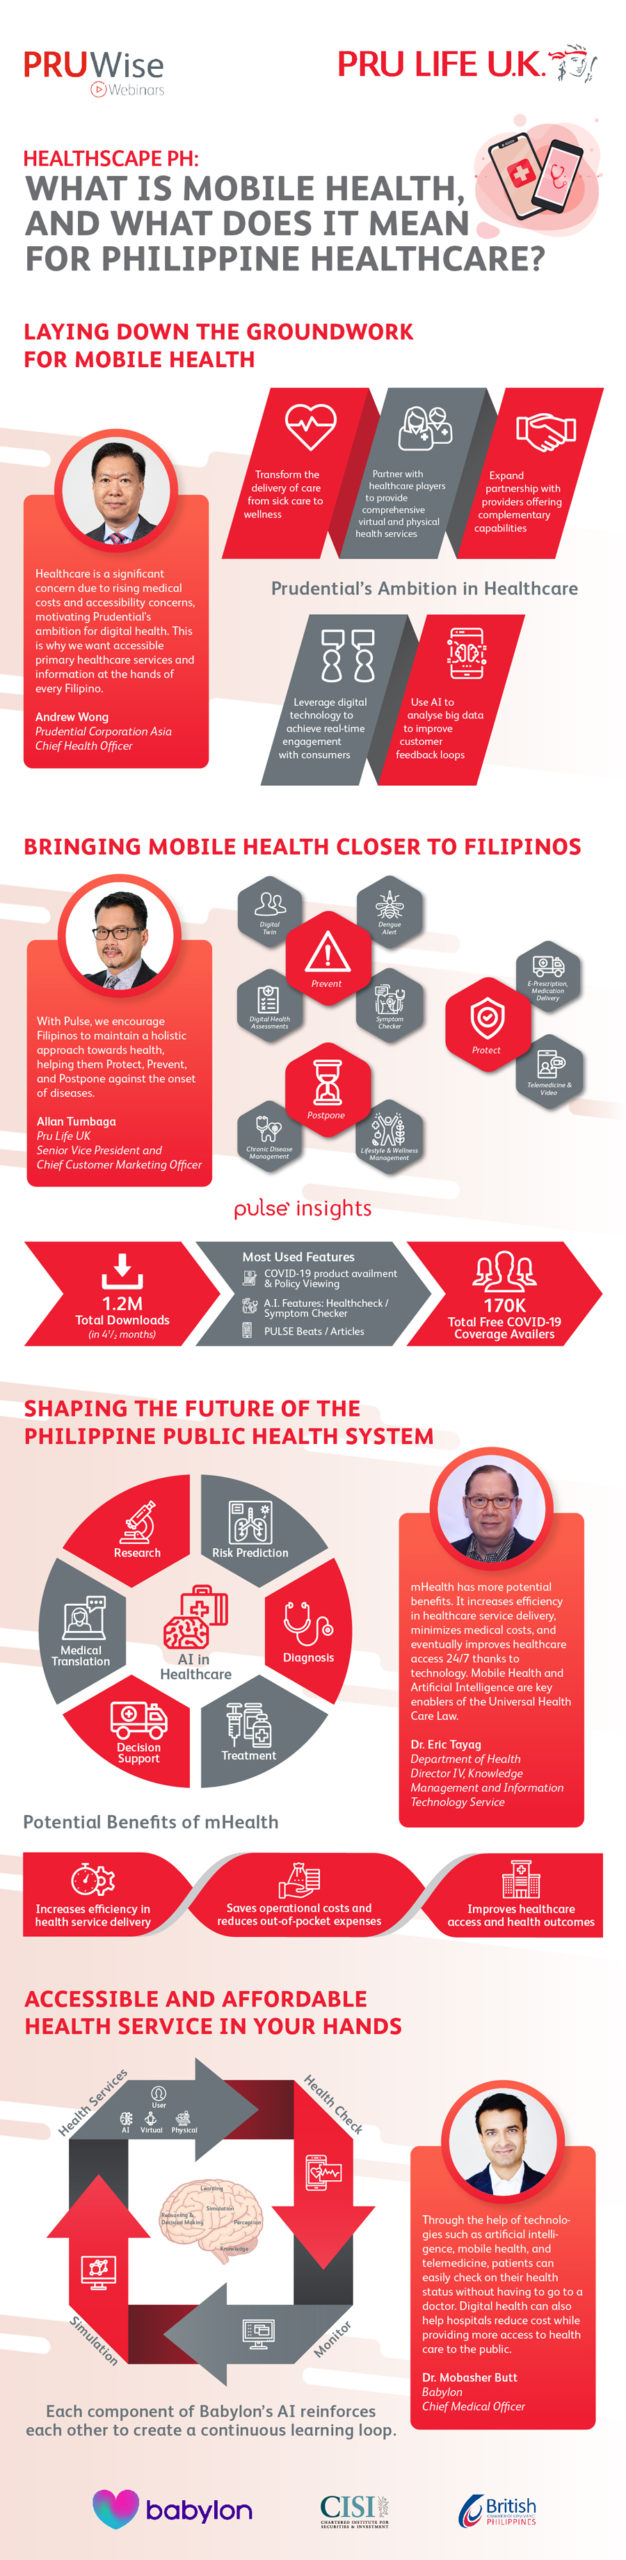 Pru Life UK Advocates Digital Health in the Philippines